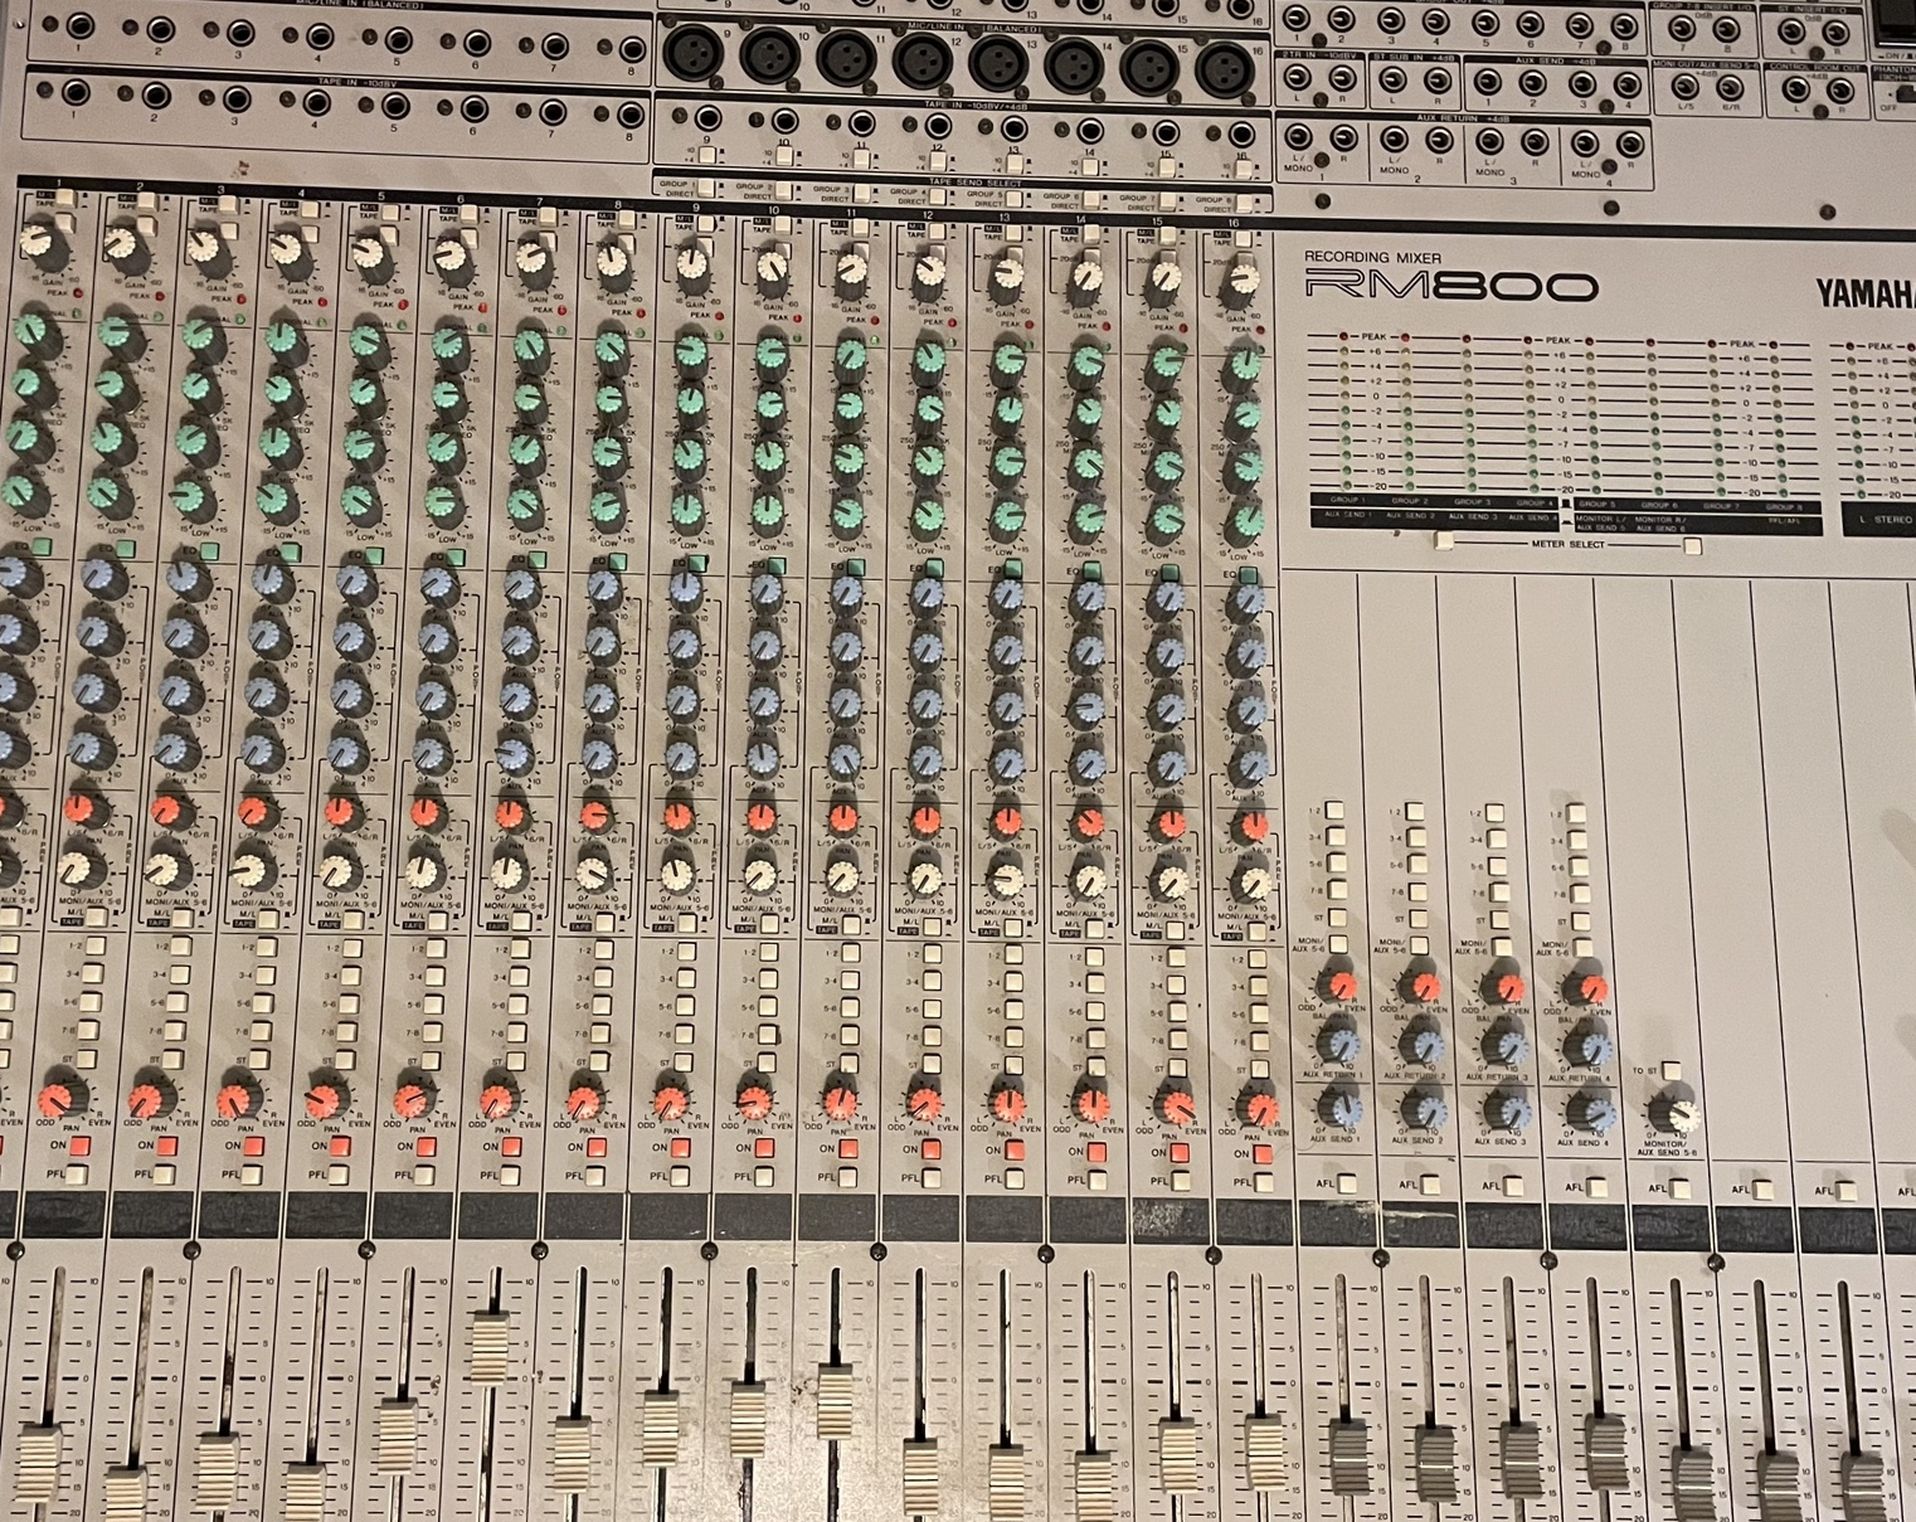 Yamaha RM800 mixing board 16x8 analog mixer